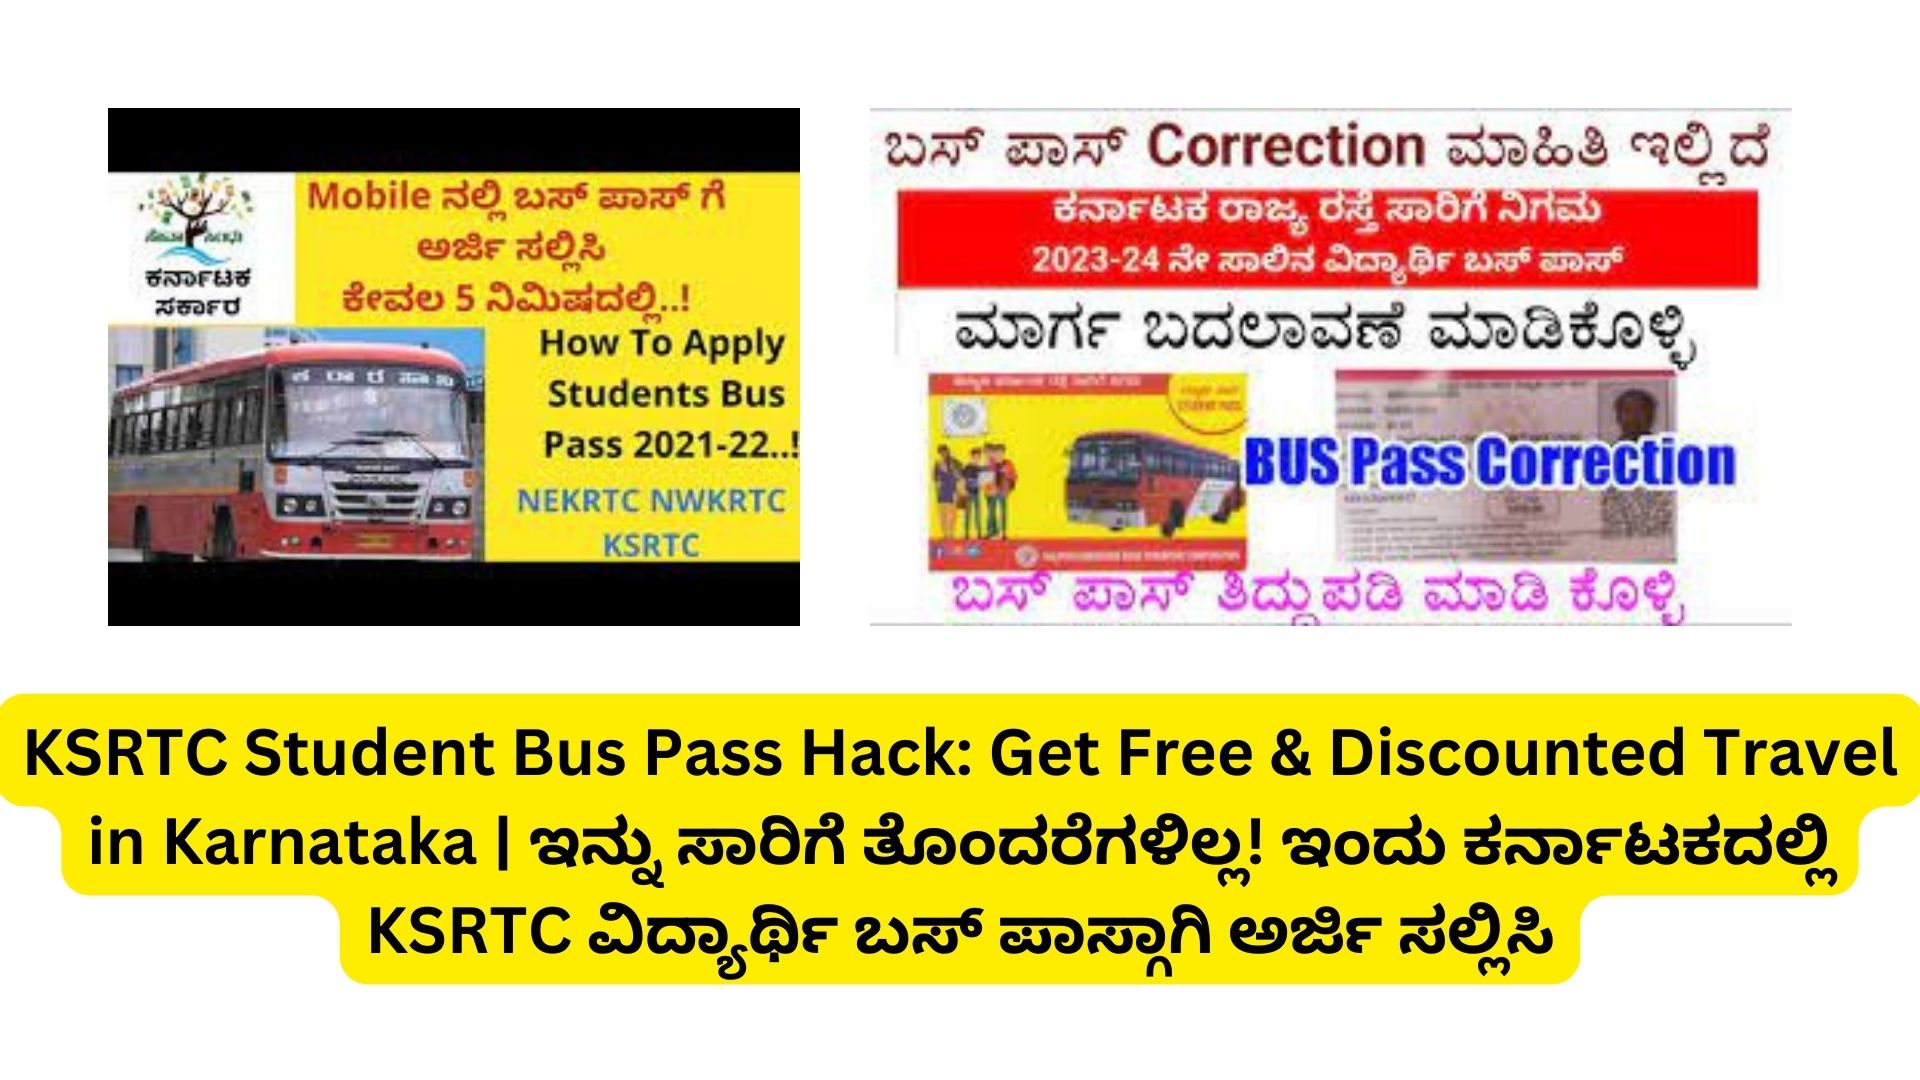 KSRTC Student Bus Pass Hack: Get Free & Discounted Travel in Karnataka | ಇನ್ನು ಸಾರಿಗೆ ತೊಂದರೆಗಳಿಲ್ಲ! ಇಂದು ಕರ್ನಾಟಕದಲ್ಲಿ KSRTC ವಿದ್ಯಾರ್ಥಿ ಬಸ್ ಪಾಸ್ಗಾಗಿ ಅರ್ಜಿ ಸಲ್ಲಿಸಿ